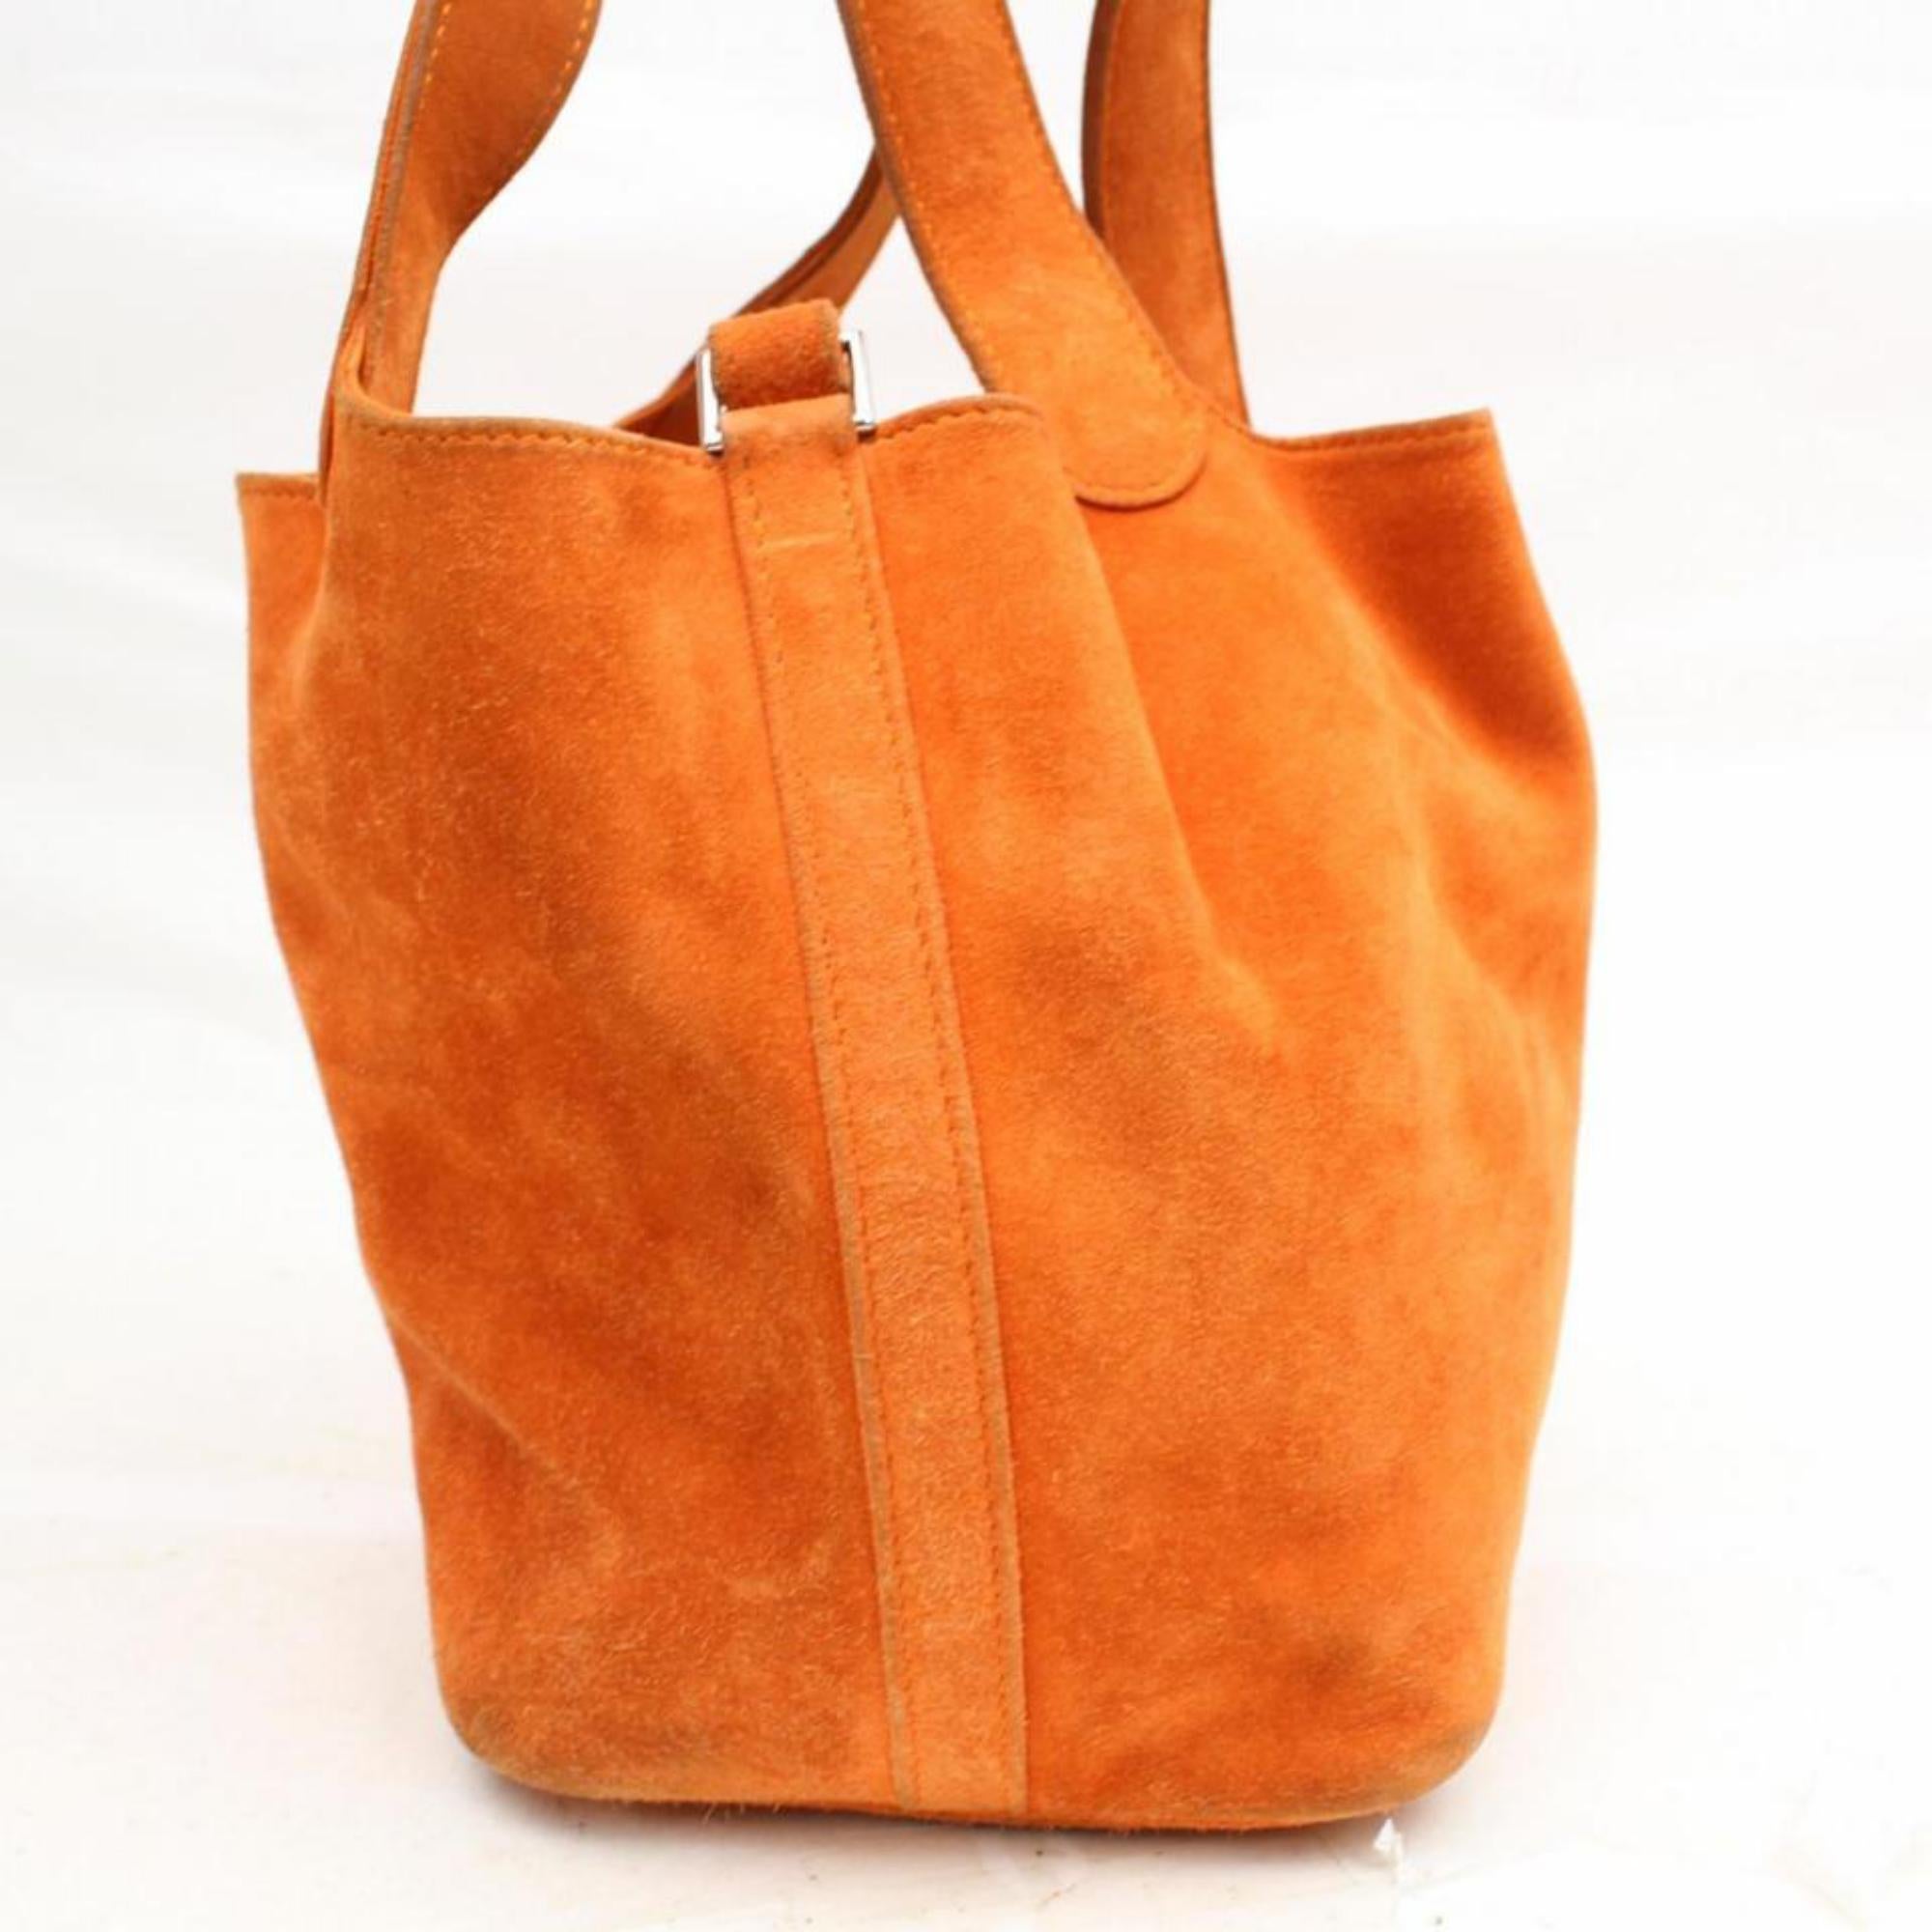 Hermès Picotin 18 Pm 868694 Orange Suede Leather Tote For Sale 3